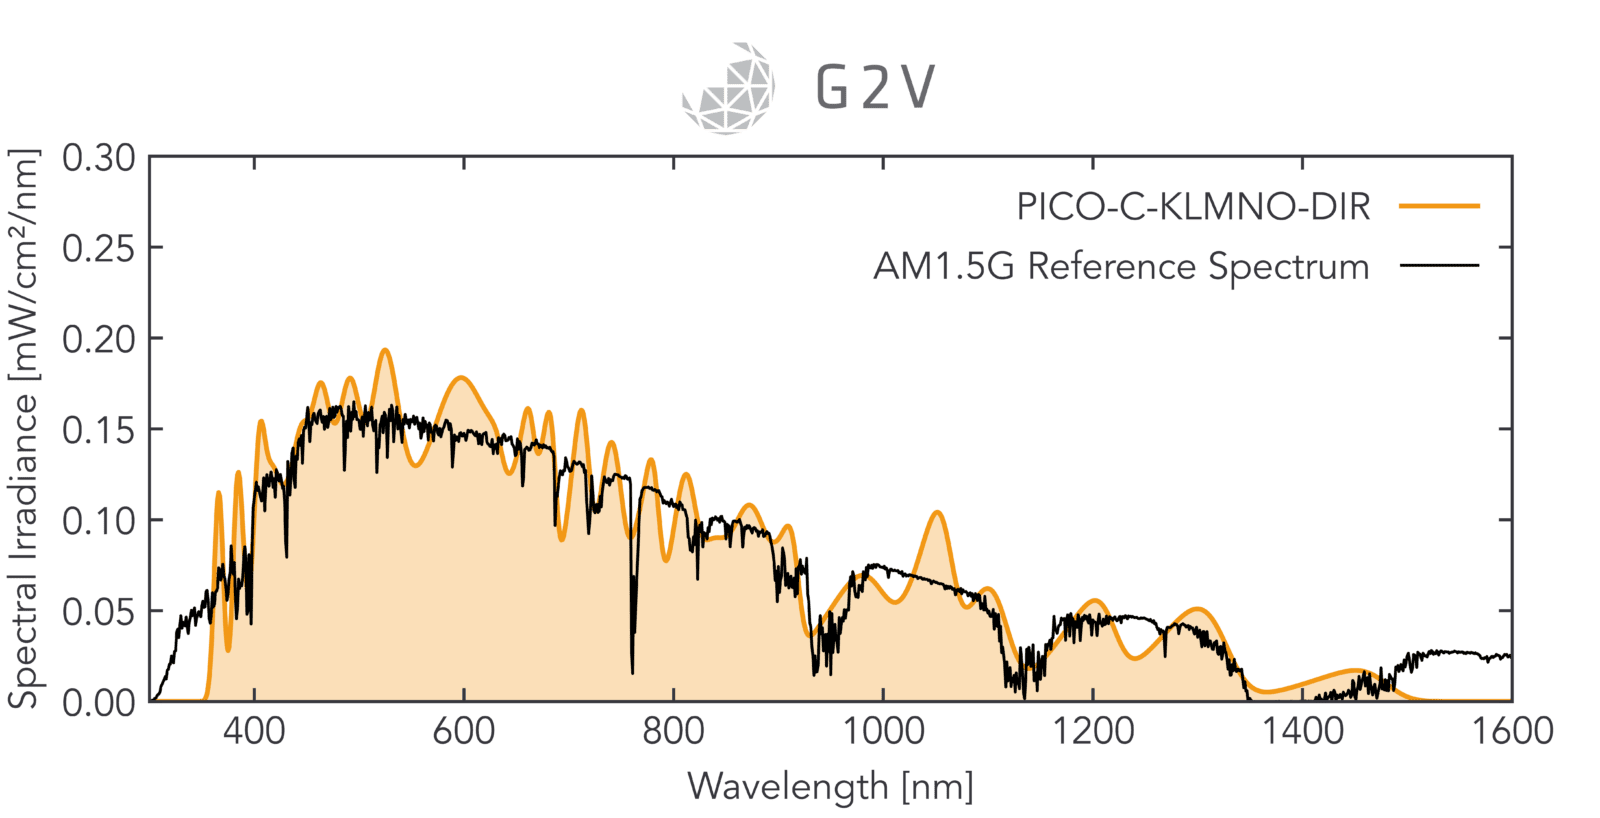 G2V Optics small area Pico solar simulator 1.5G spectral match